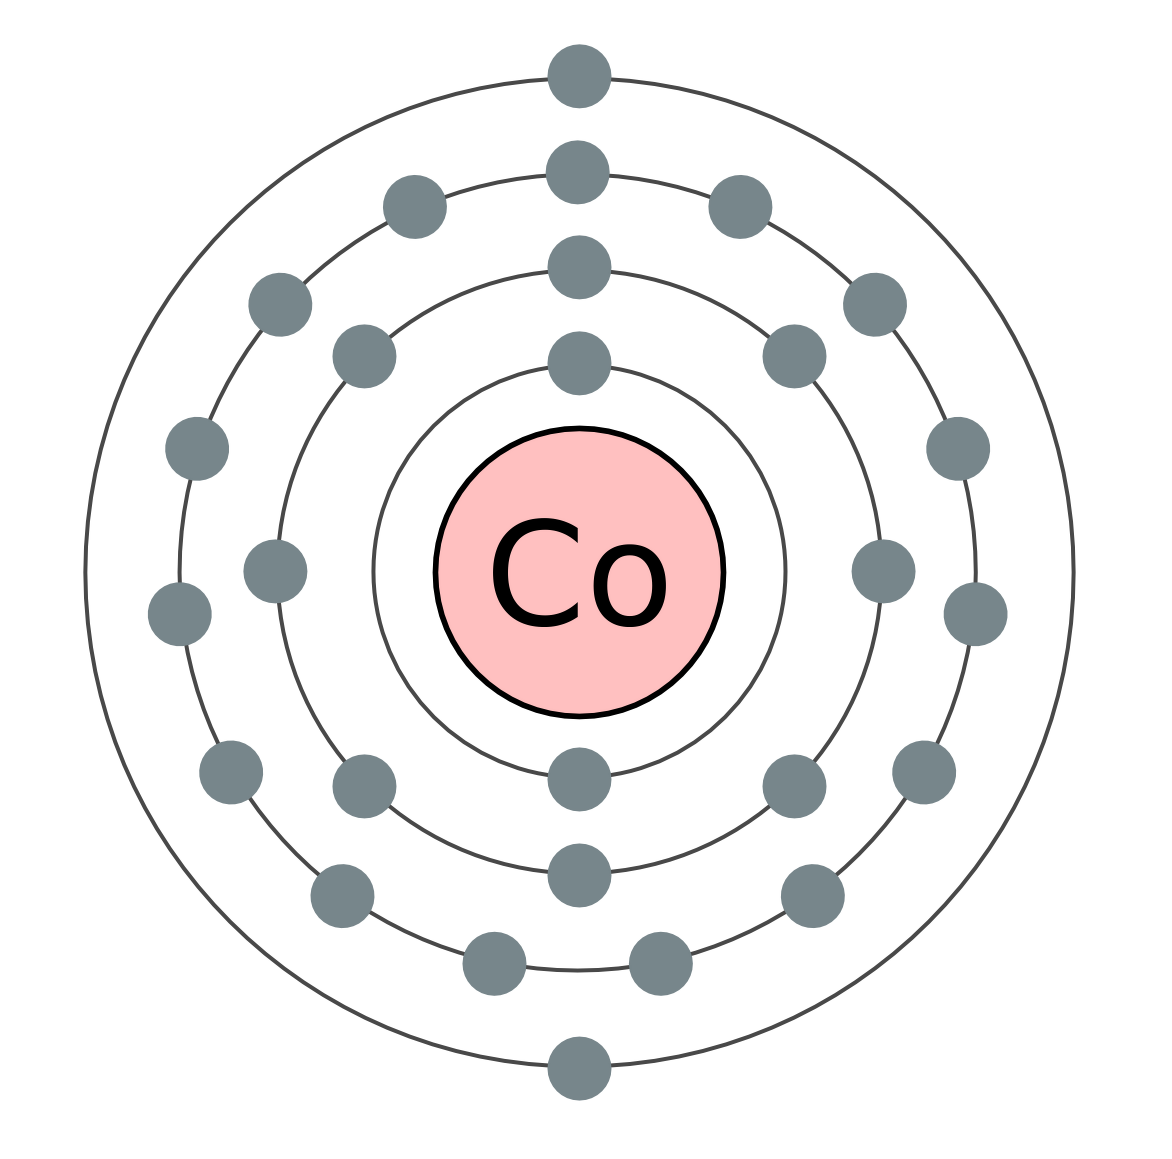 Cobalt - Wikipedia